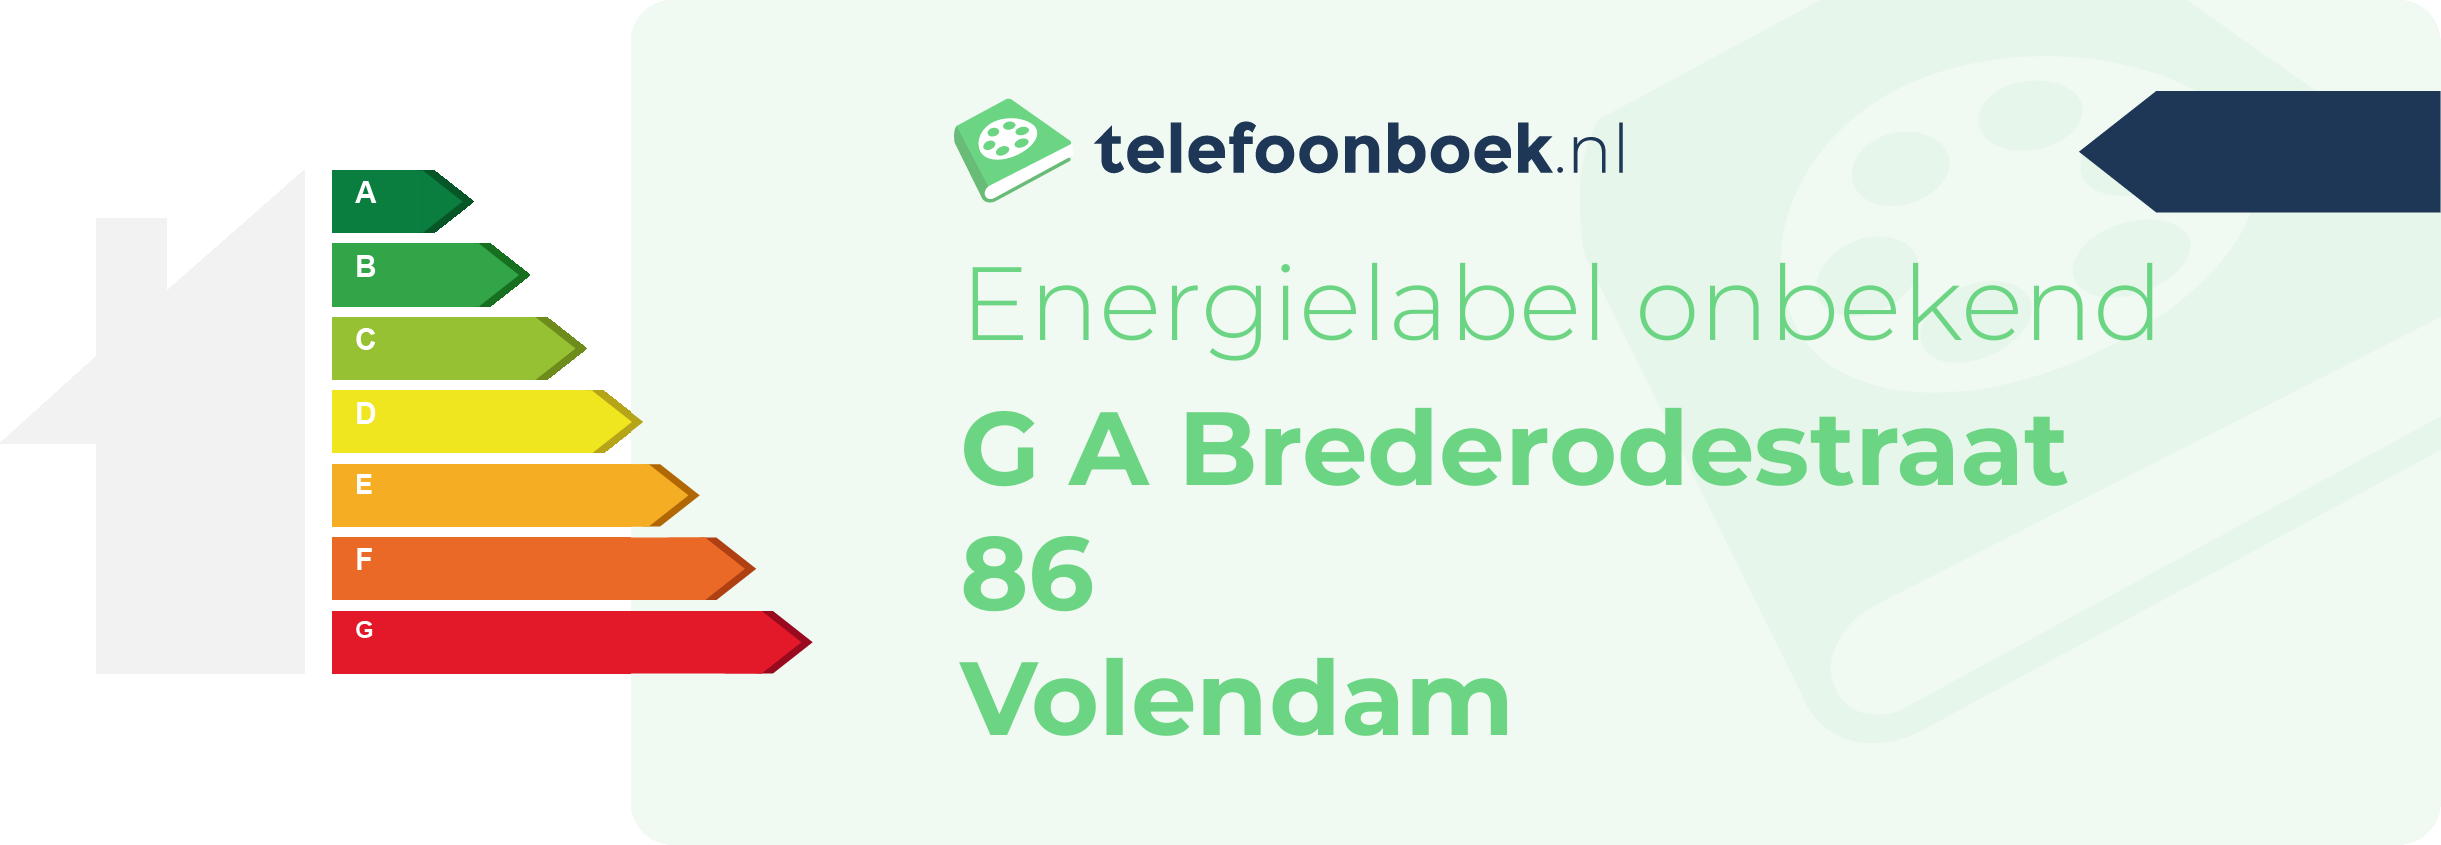 Energielabel G A Brederodestraat 86 Volendam